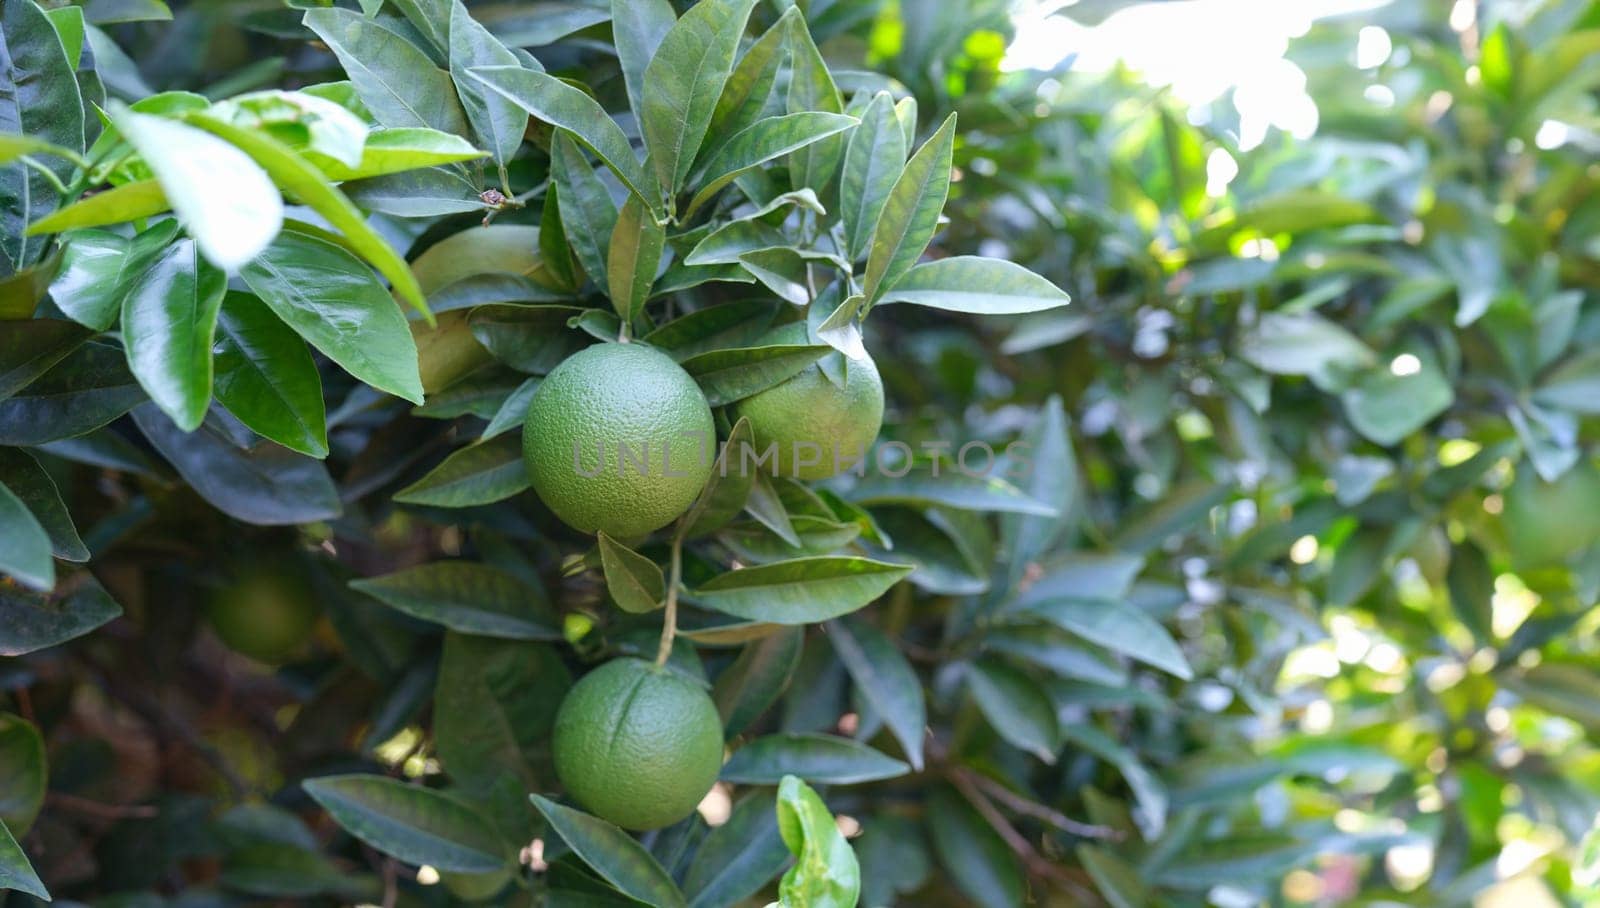 Unripe green tangerine growing on tree. Tropical garden